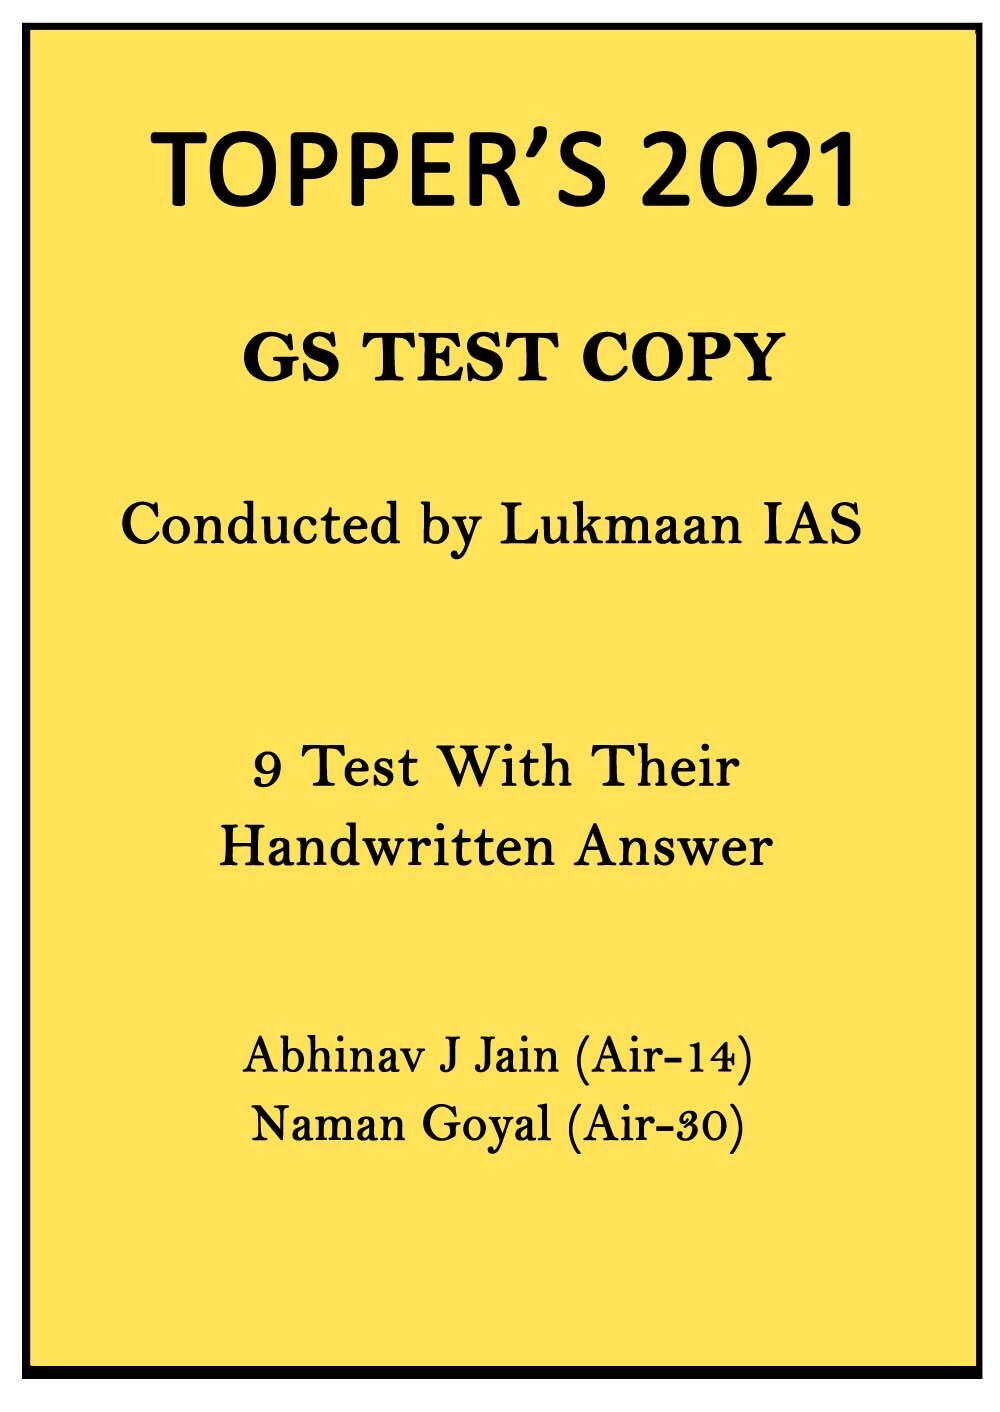 lukmaan-ias-toppers-abhinav-j-jain-and-naman-goyal-9-gs-handwritten-tect-copy-notes-2021